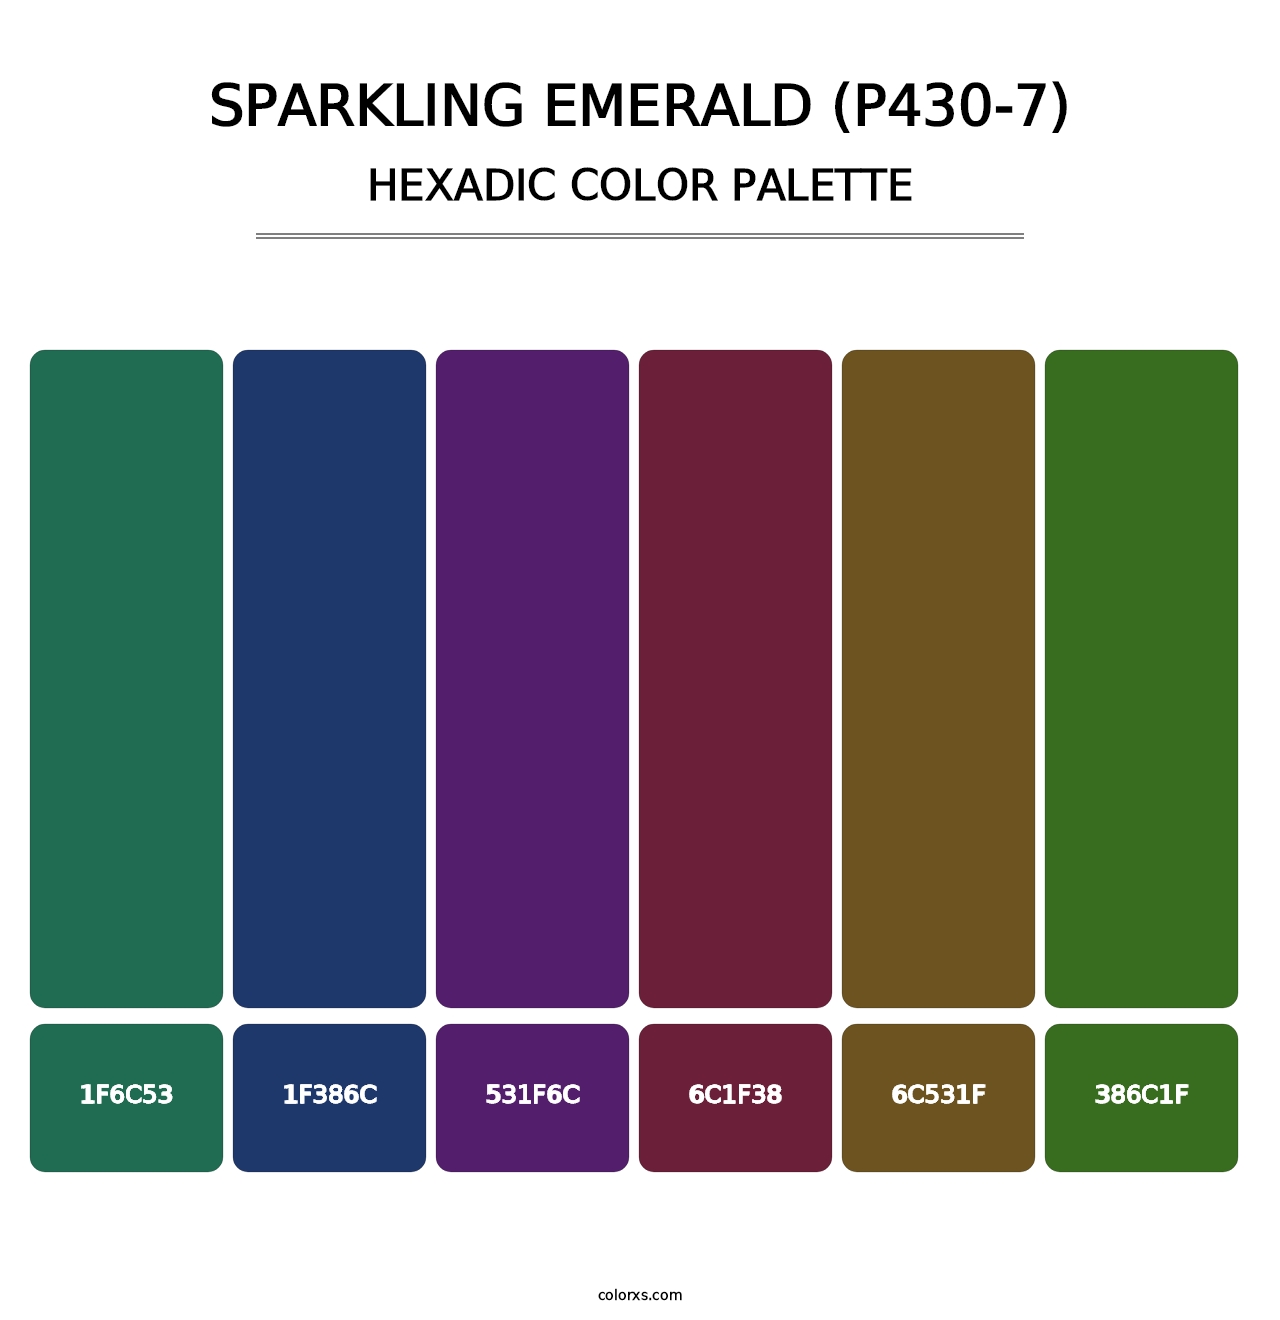 Sparkling Emerald (P430-7) - Hexadic Color Palette